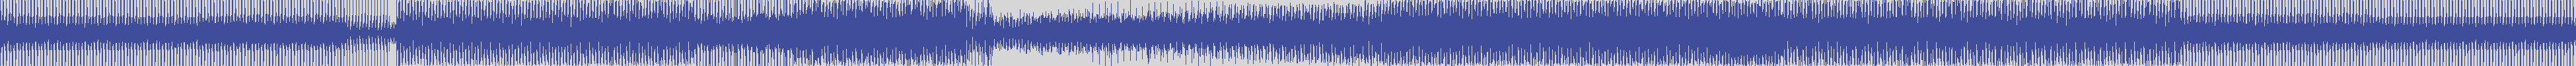 atomic_recordings [AR016] 2 Mind - Traffic [Unitech Remix] audio wave form